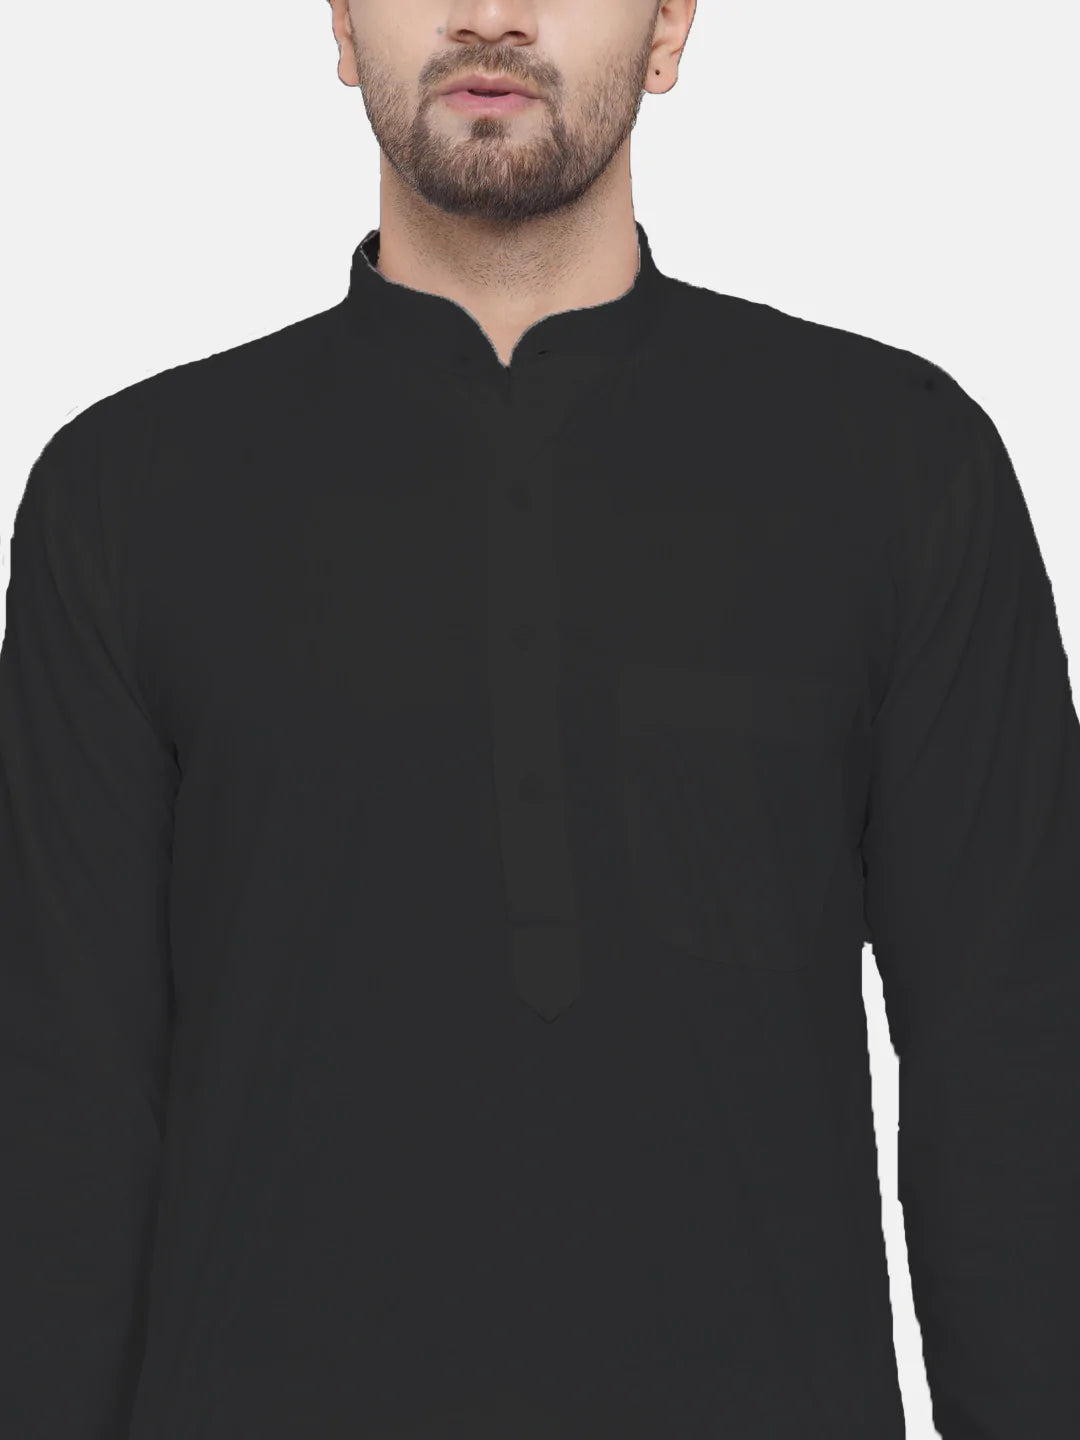 Jompers Men's Black Solid Cotton Kurta Payjama Set ( JOKP 555 Black )